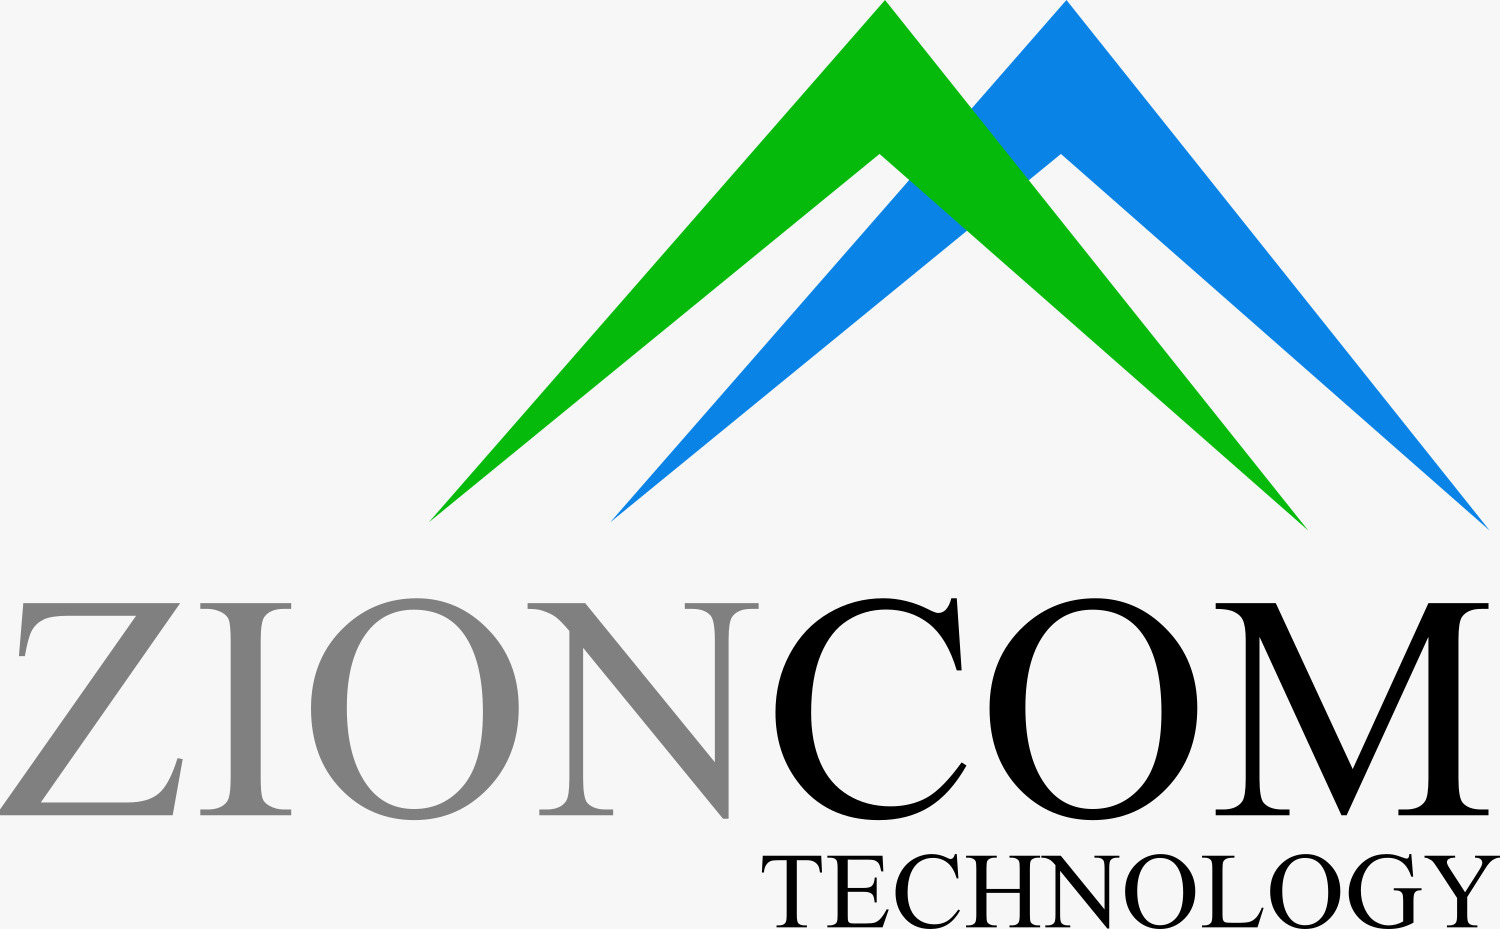 Zioncom Technology